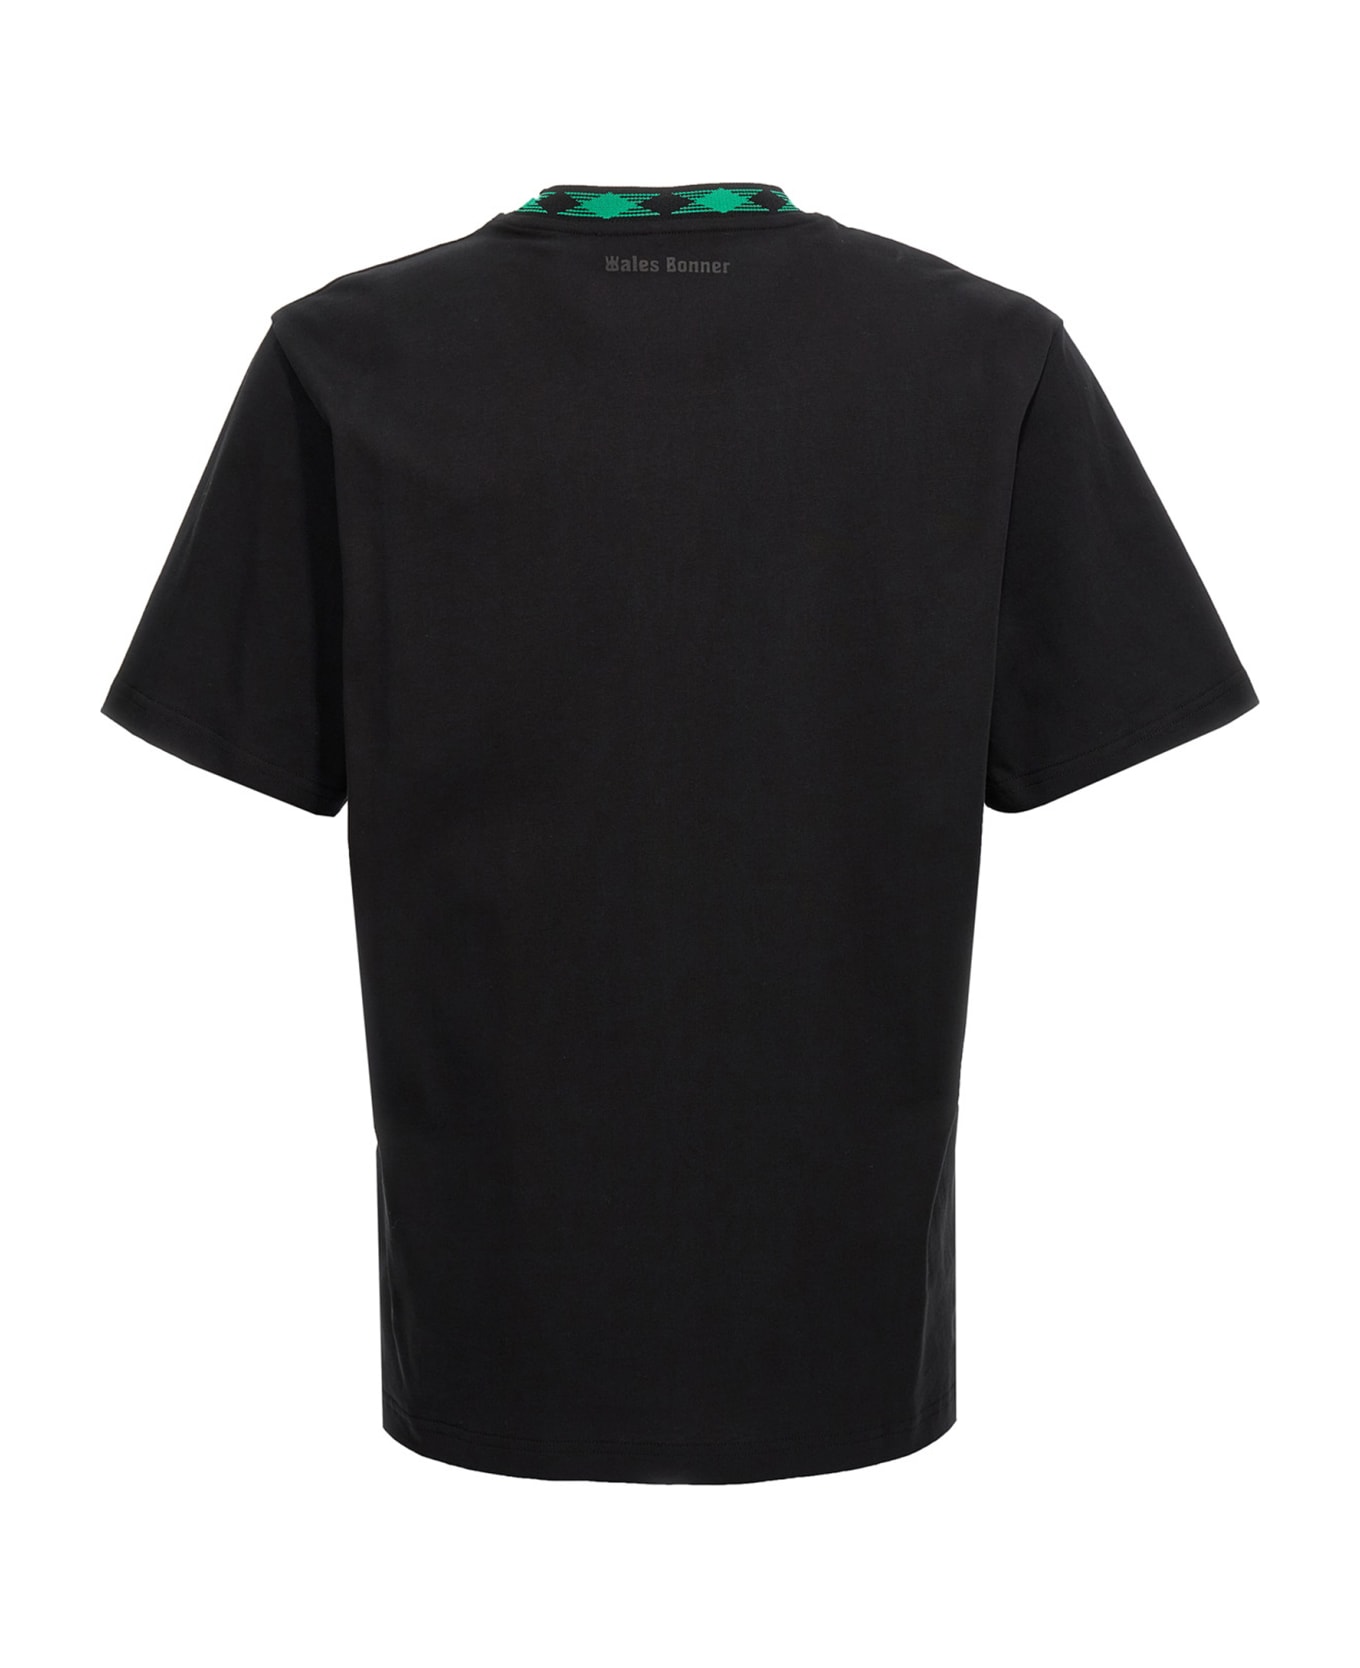 Wales Bonner 'original' T-shirt - Black  